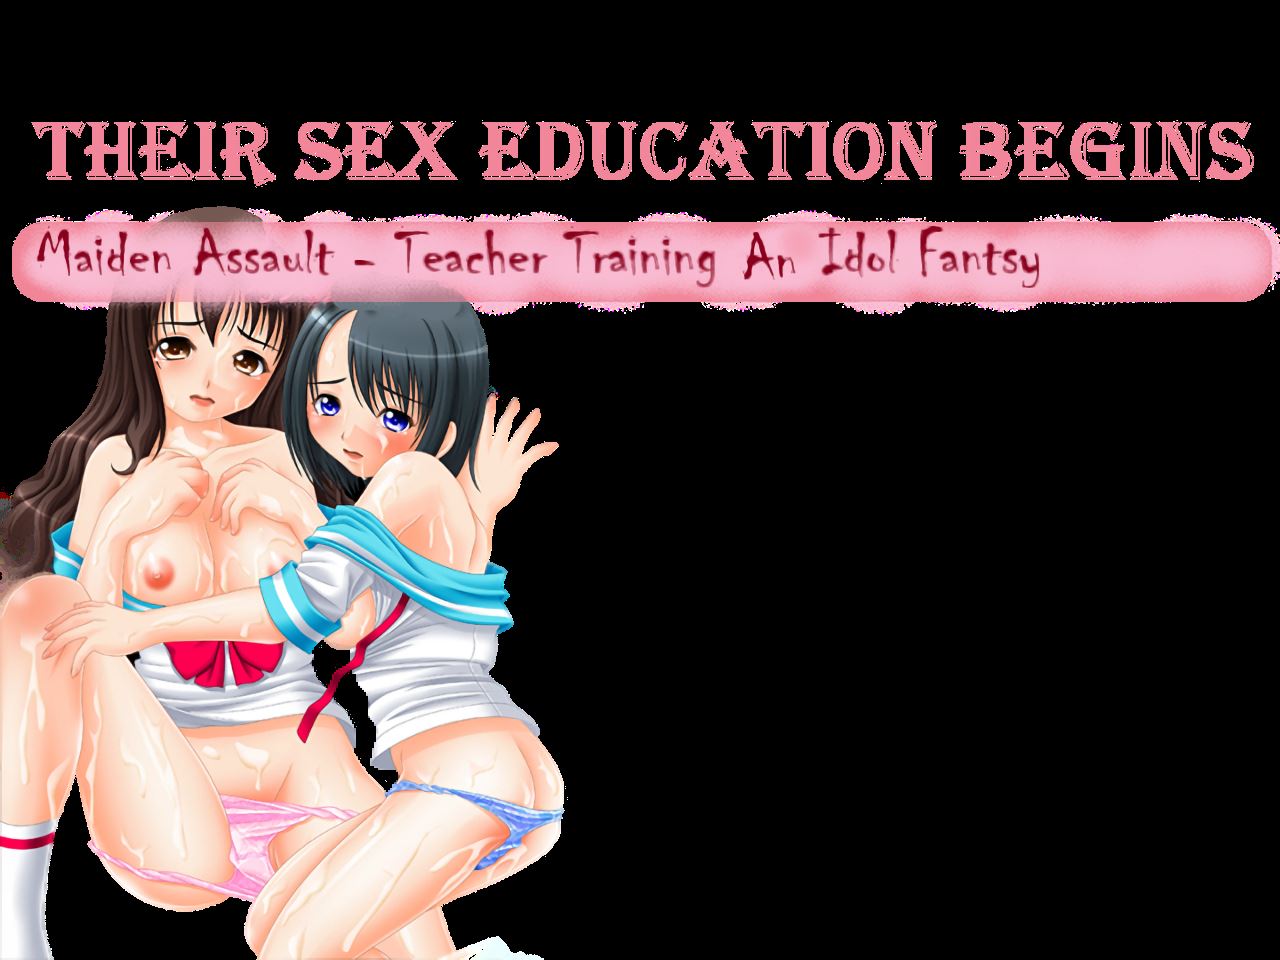 Tichar Sexy Daunlod - Maiden Assault: Teacher Training An Idol Fantsy Others Porn Sex Game  v.Final Download for Windows